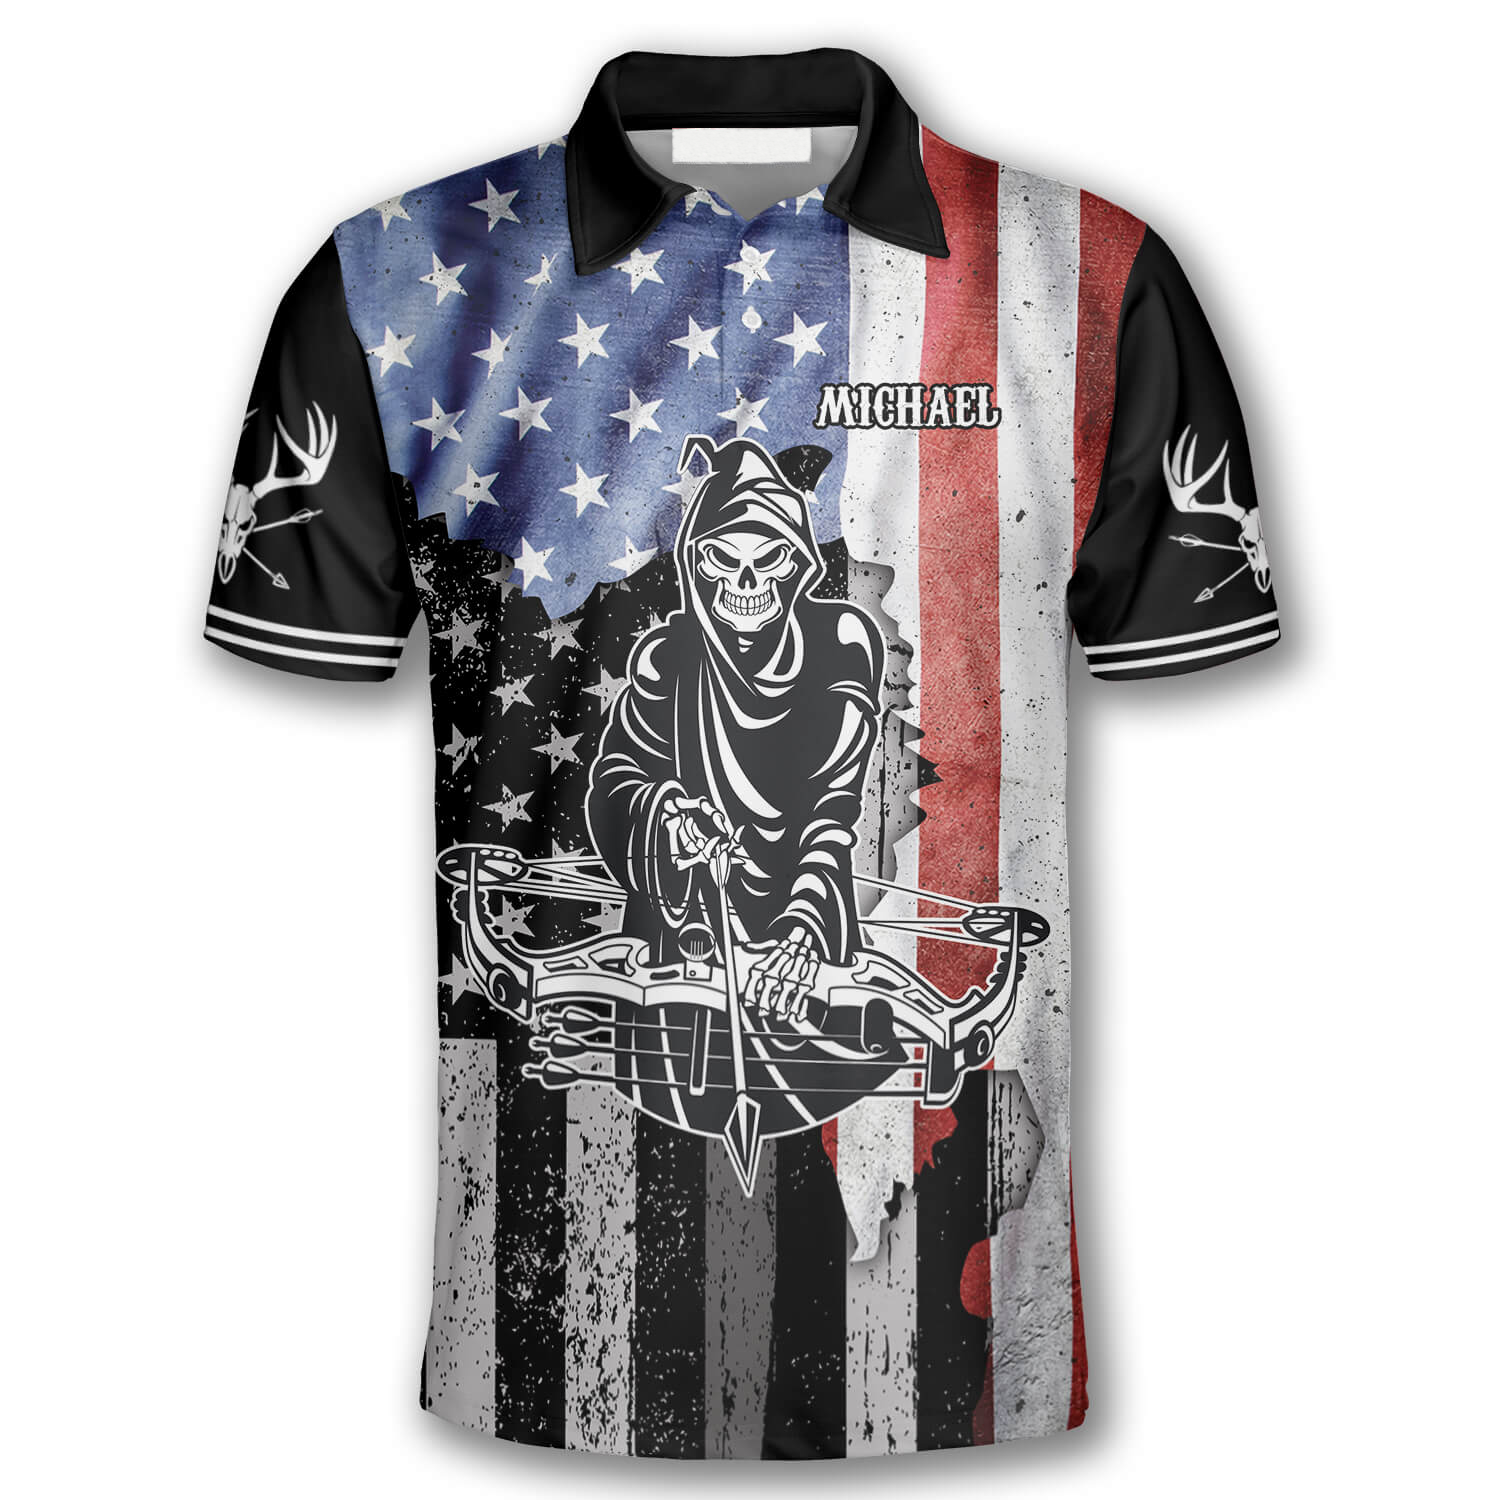 Archery Grim Reaper American Flag Custom Archery Shirts for Men/ Flag Shirt/ Archery Uniform Shirt